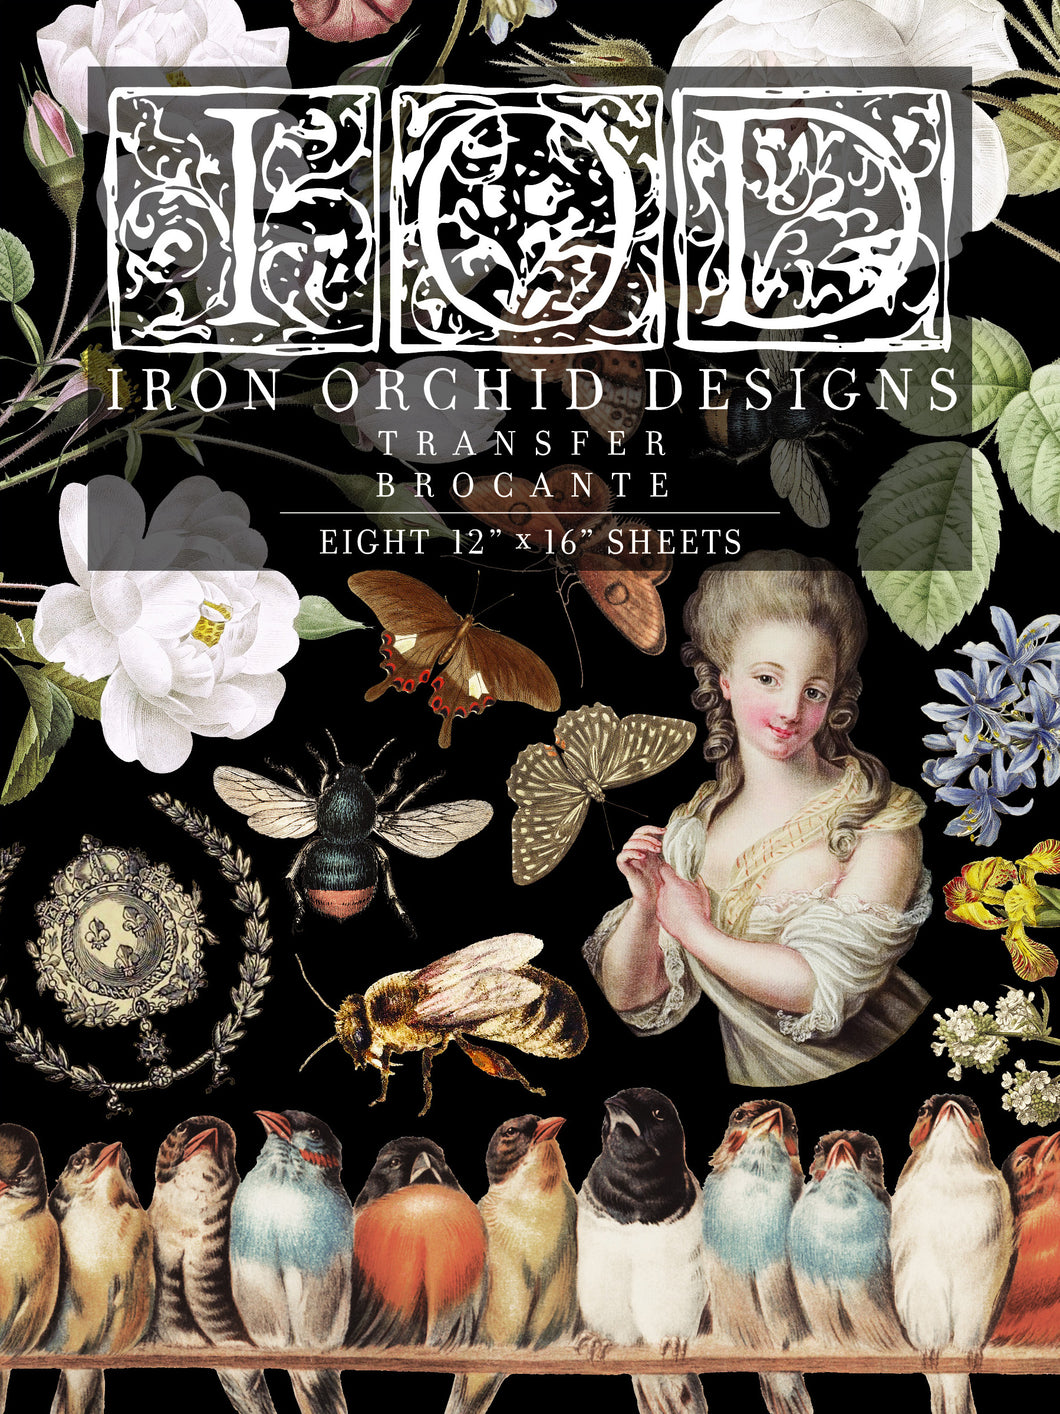 Brocante - 8 Page Iron Orchid Designs Decor Transfer